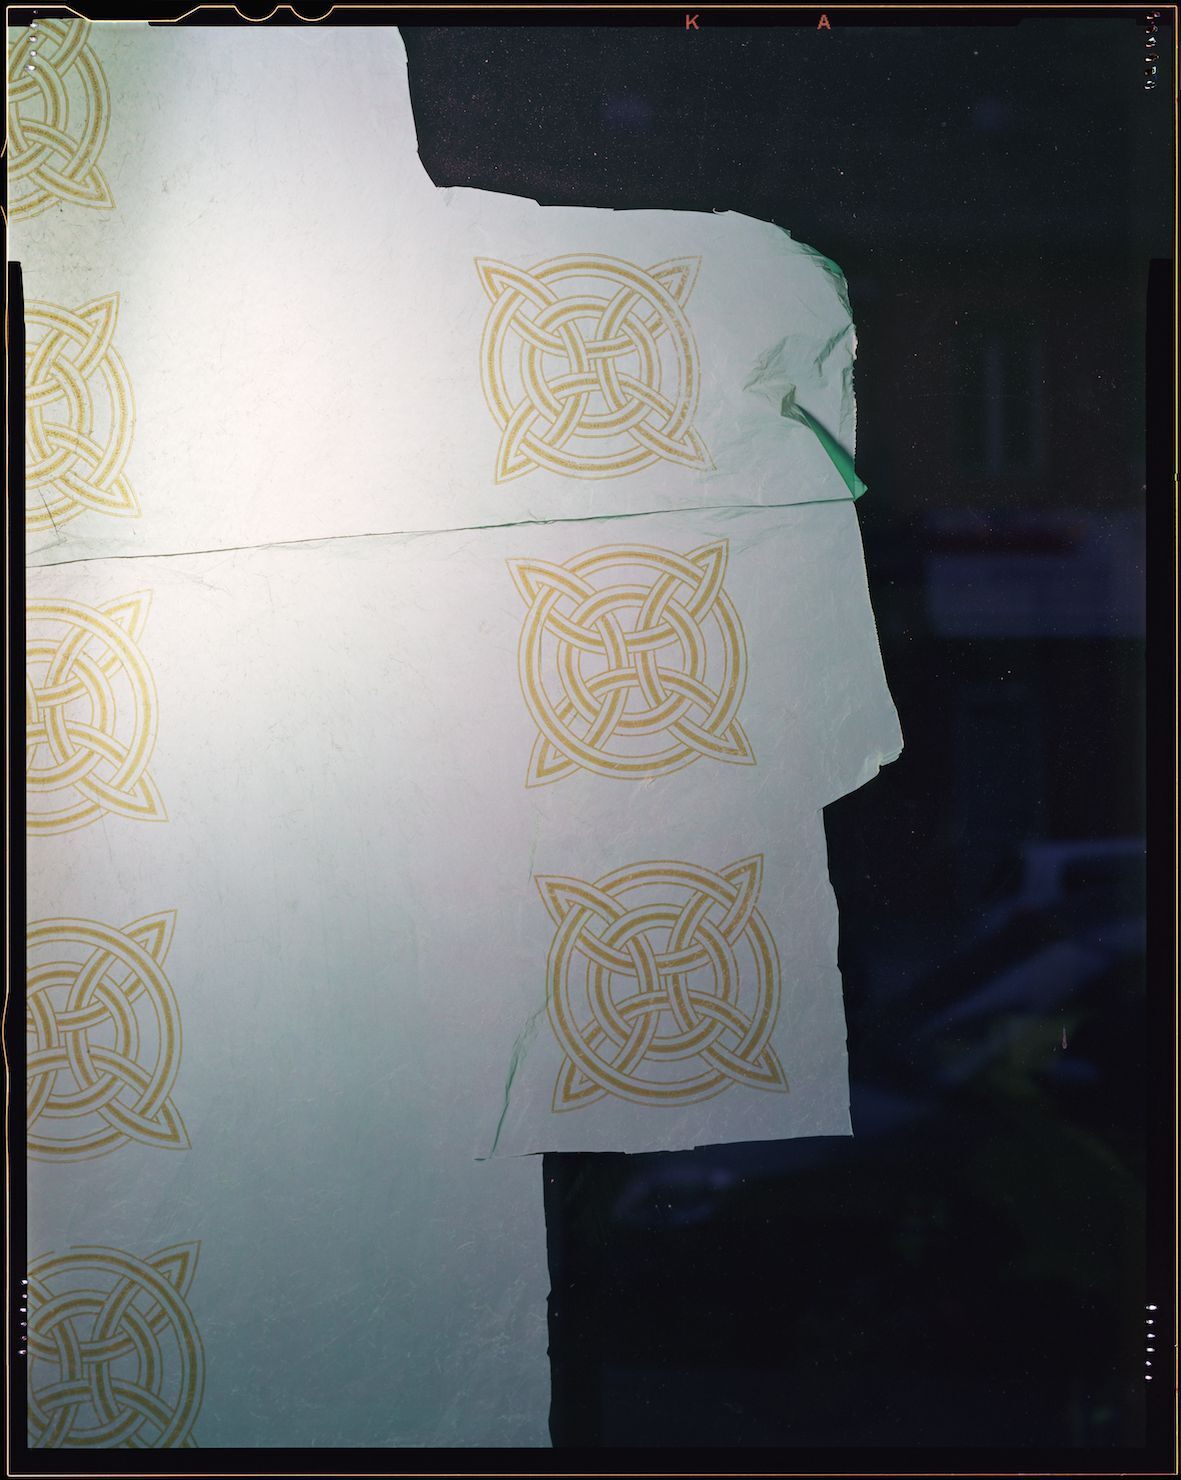 Ketuta Alexi-Meskhishvili, Suns 2021 Archival pigment print 38 x 30,5 cm / 15 x 12 inches Edition 1 of 2 + 2 AP